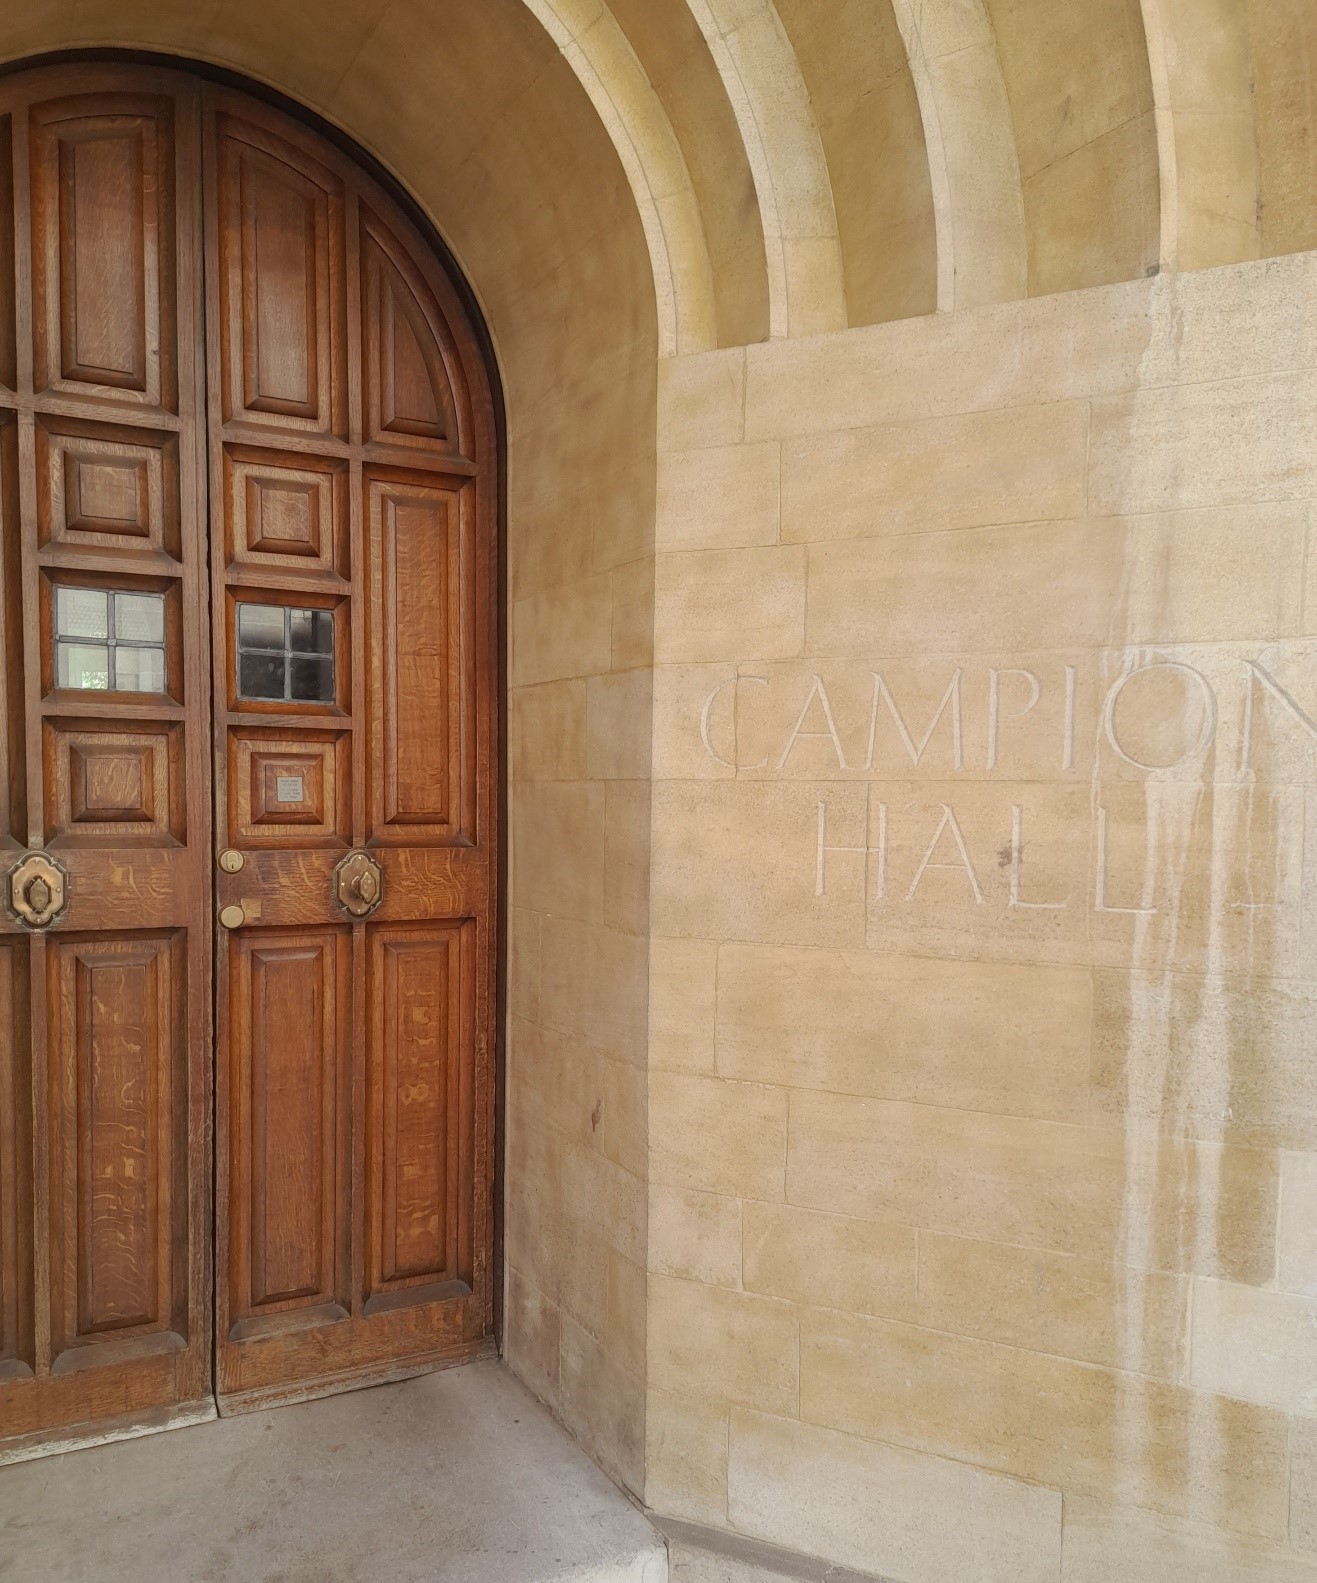 Photo of Campion Hall entrance